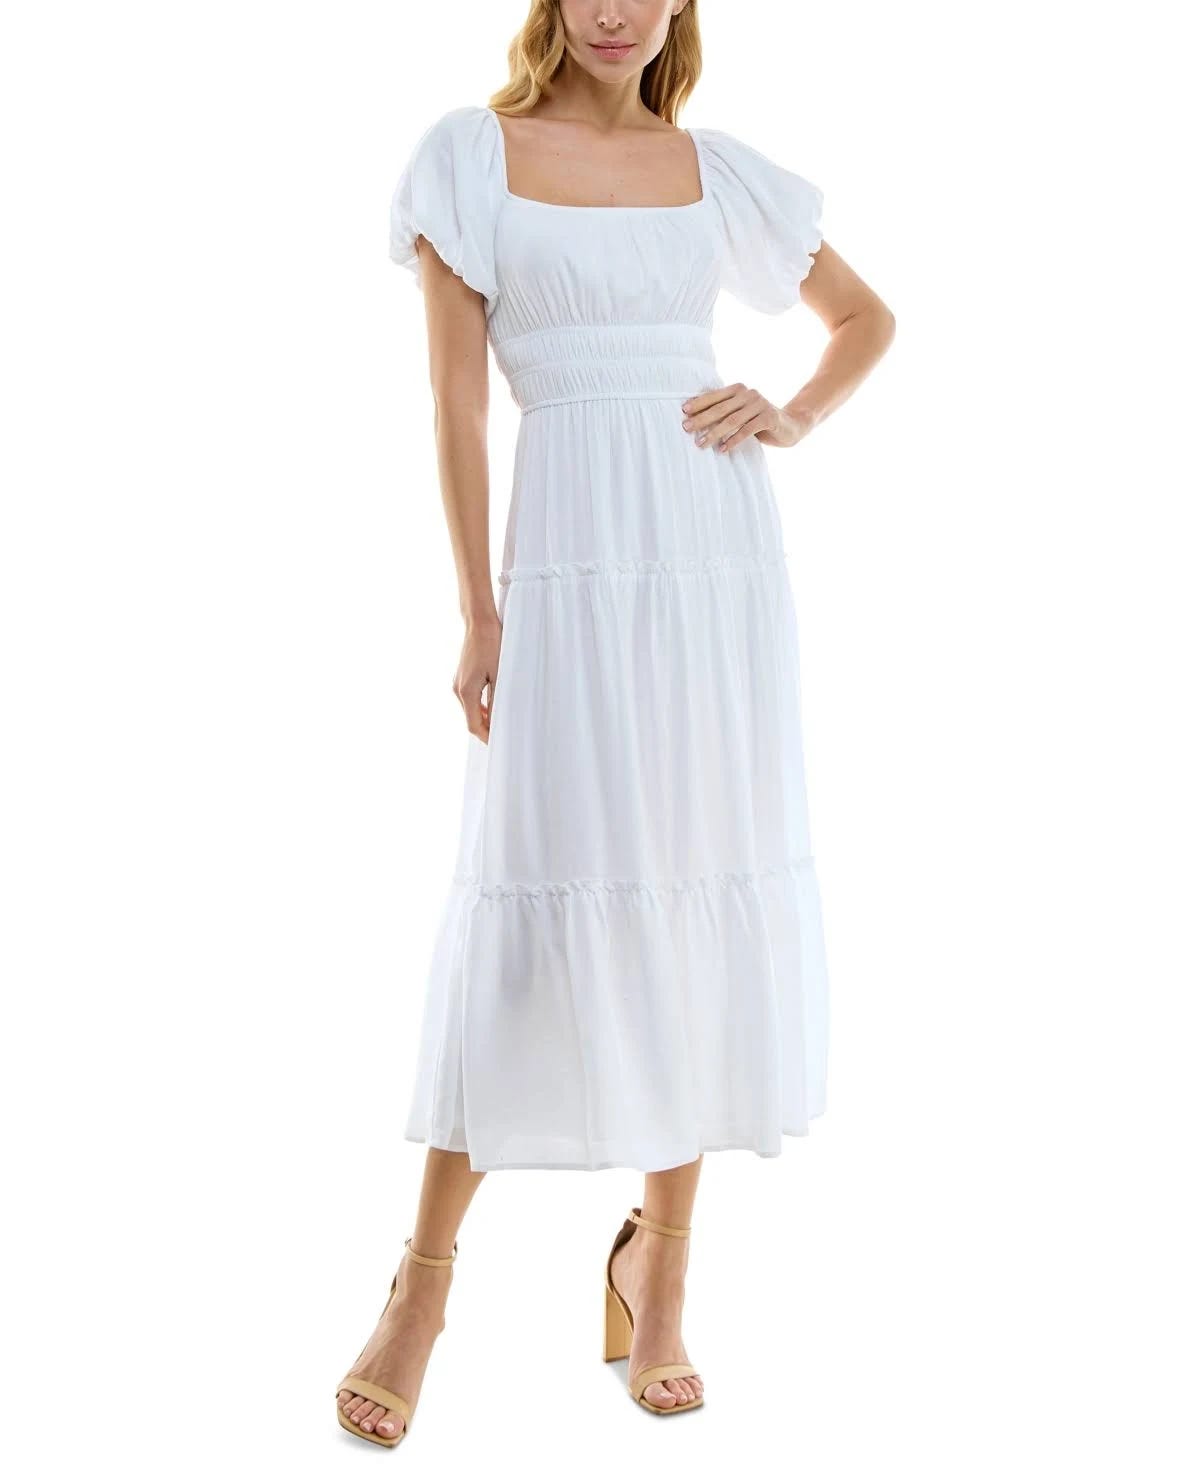 Stylish White Midi Dress with Puff Sleeves and Ruching | Image